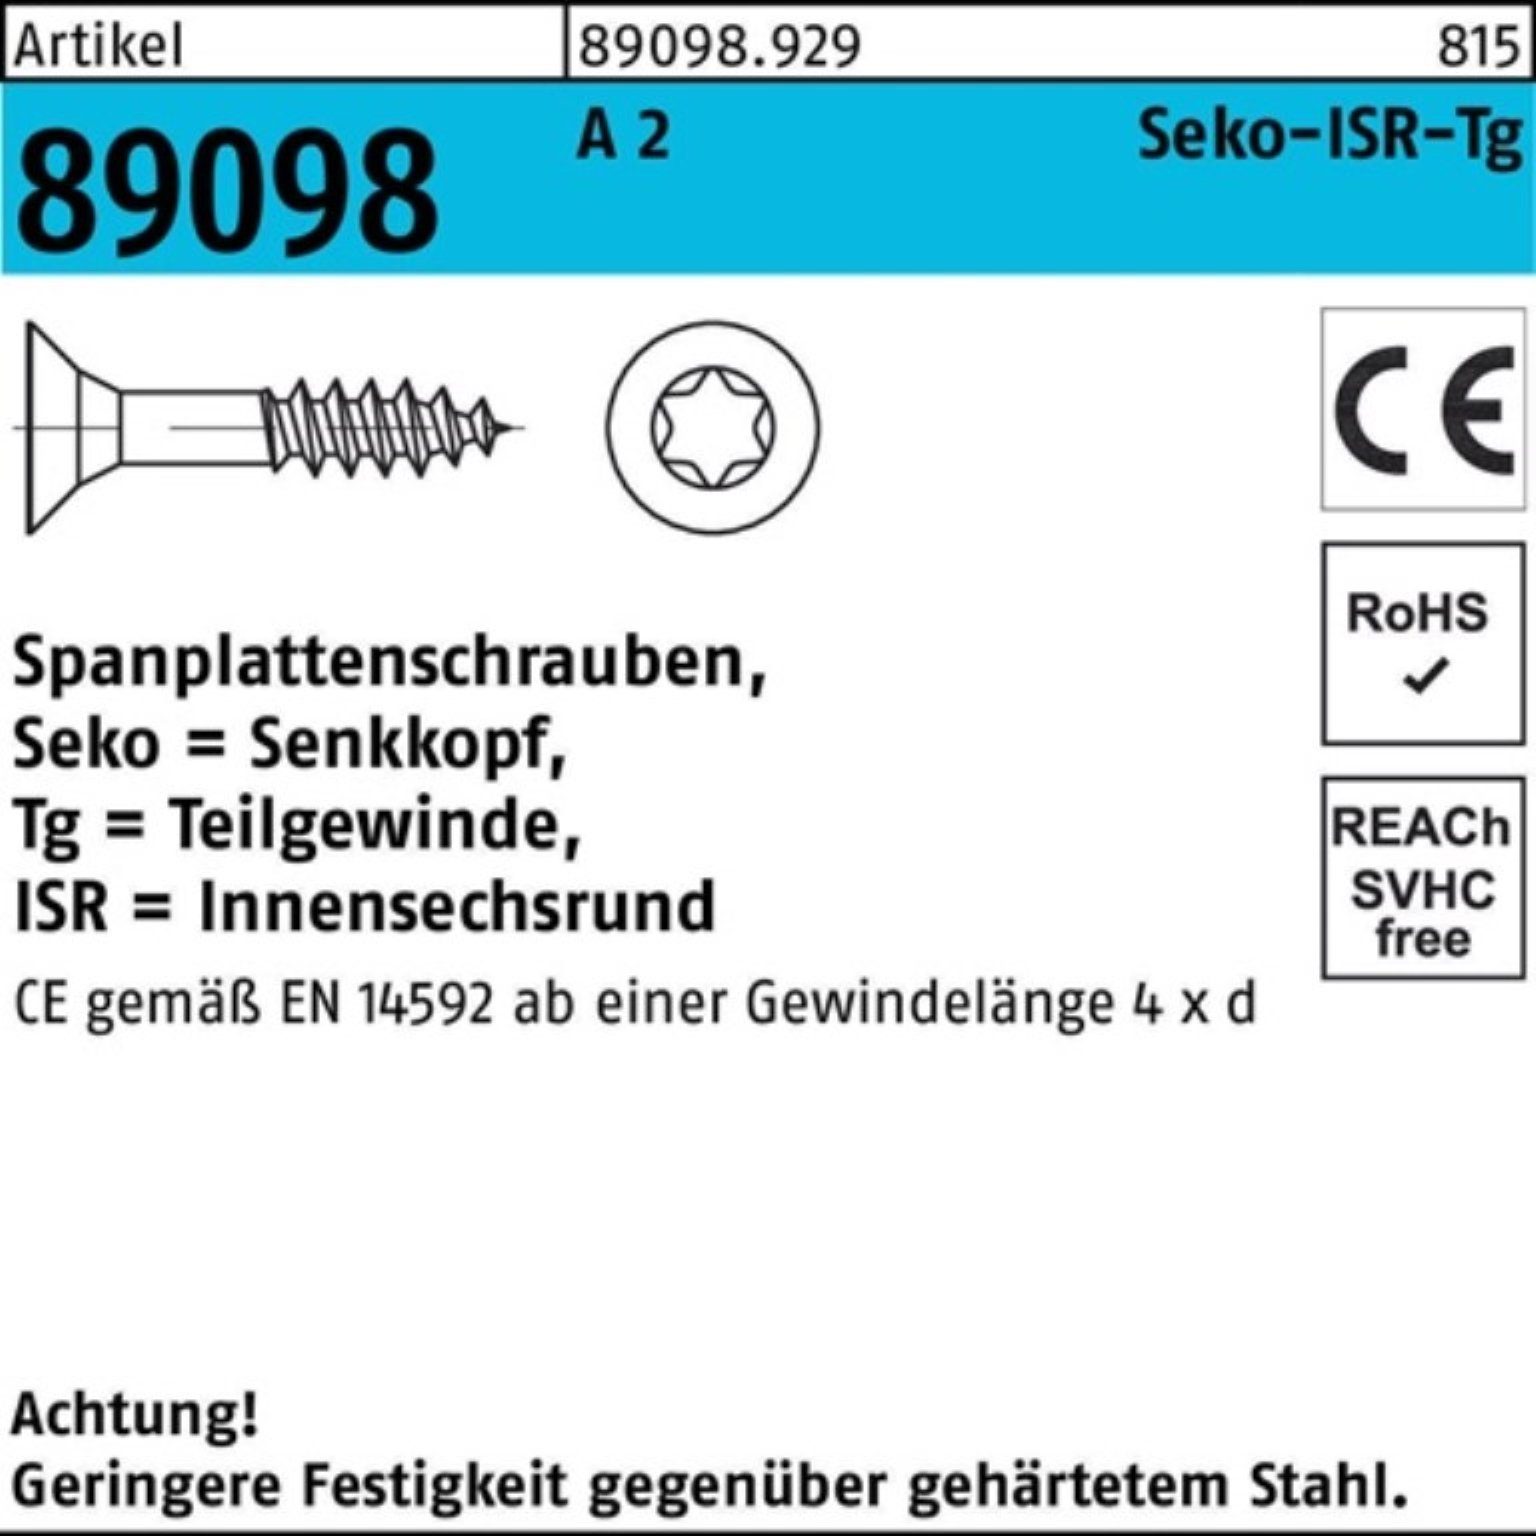 ISR 100 S 100er TG 80-T25 5x Spanplattenschraube SEKO Reyher 89098 R Pack Spanplattenschraube 2 A